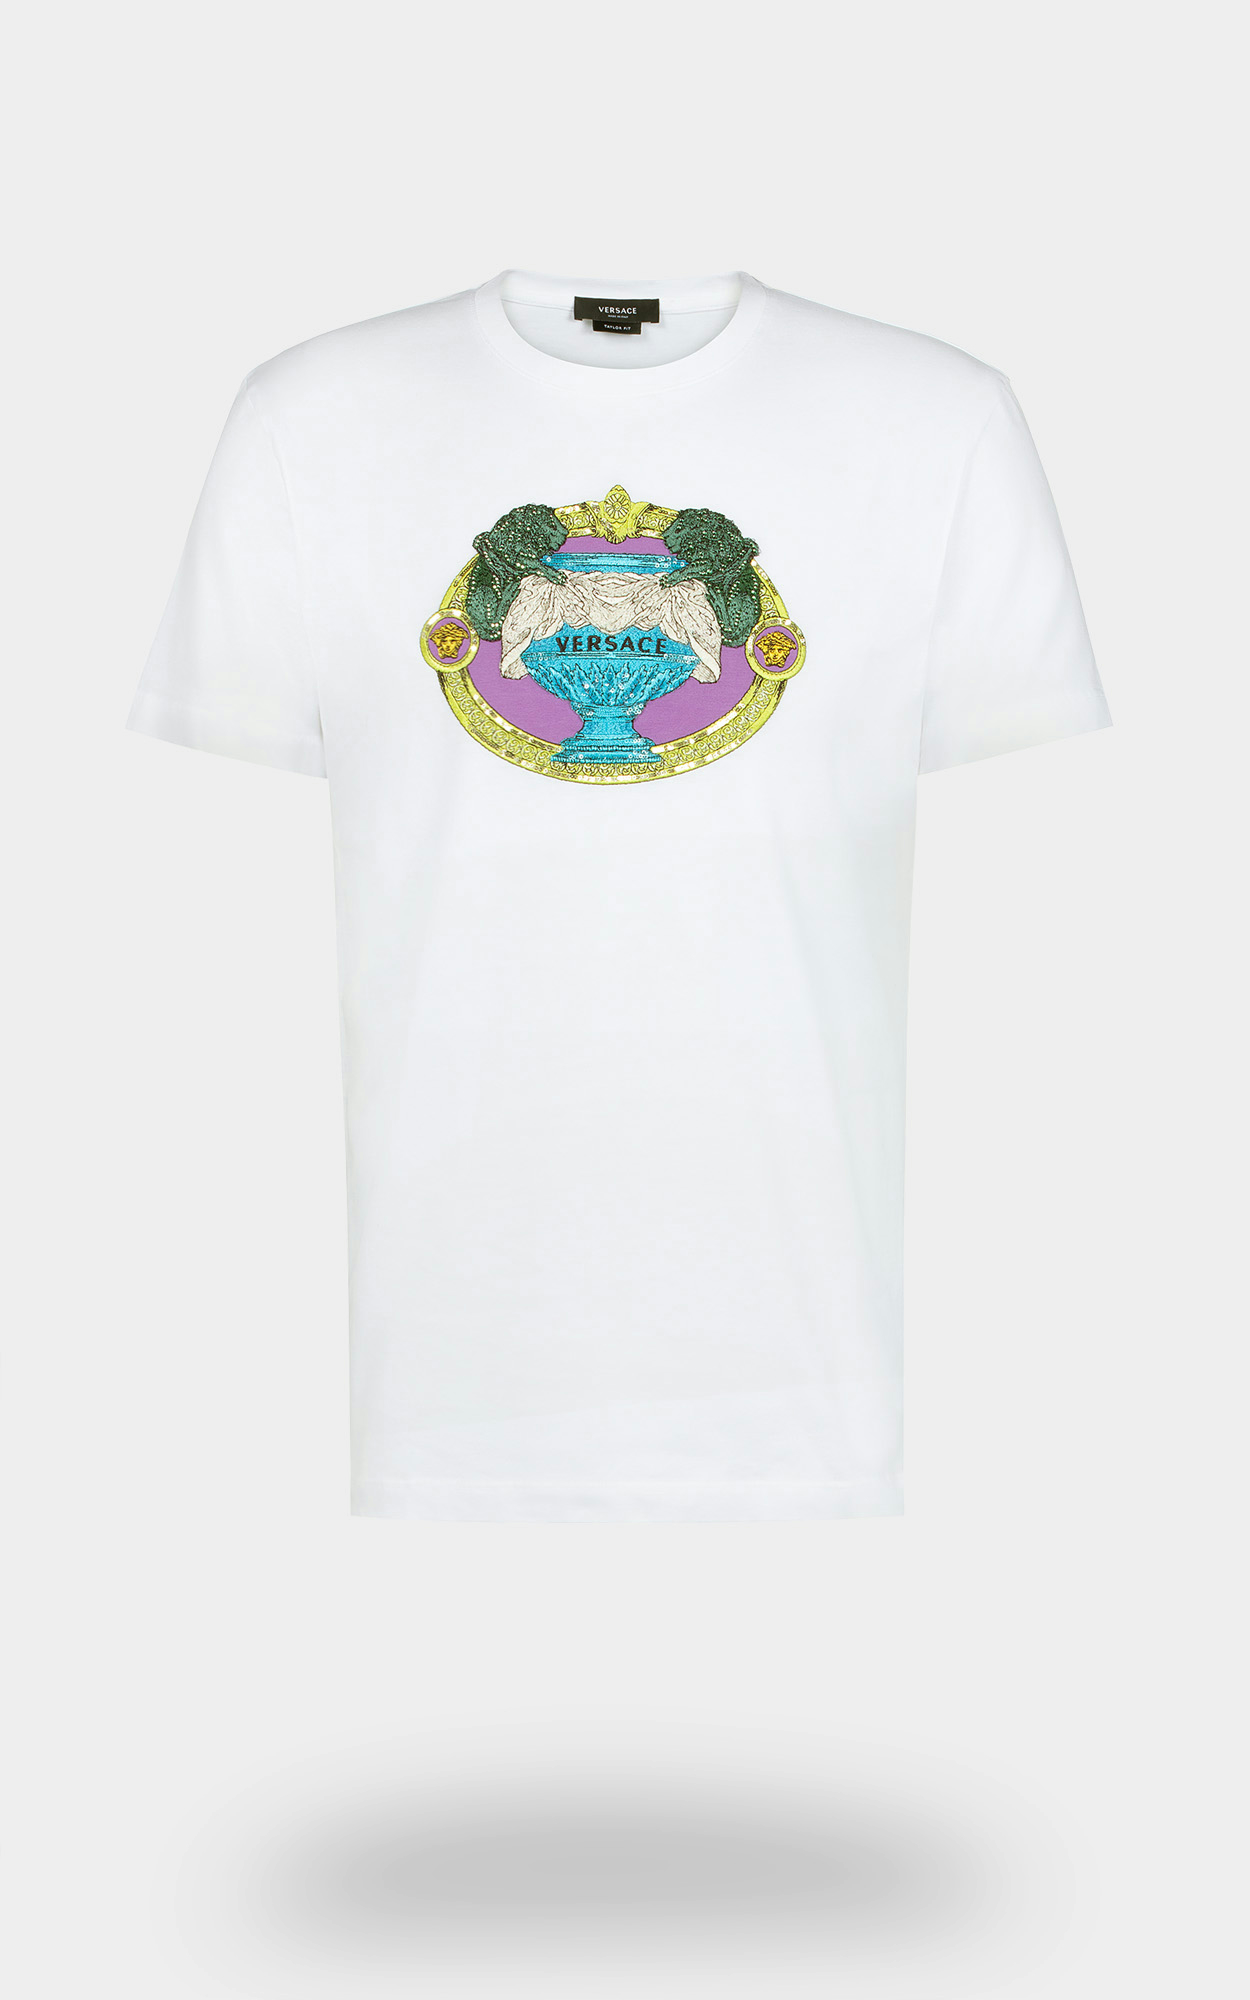 Versace - T-Shirt mit bunter Applikation